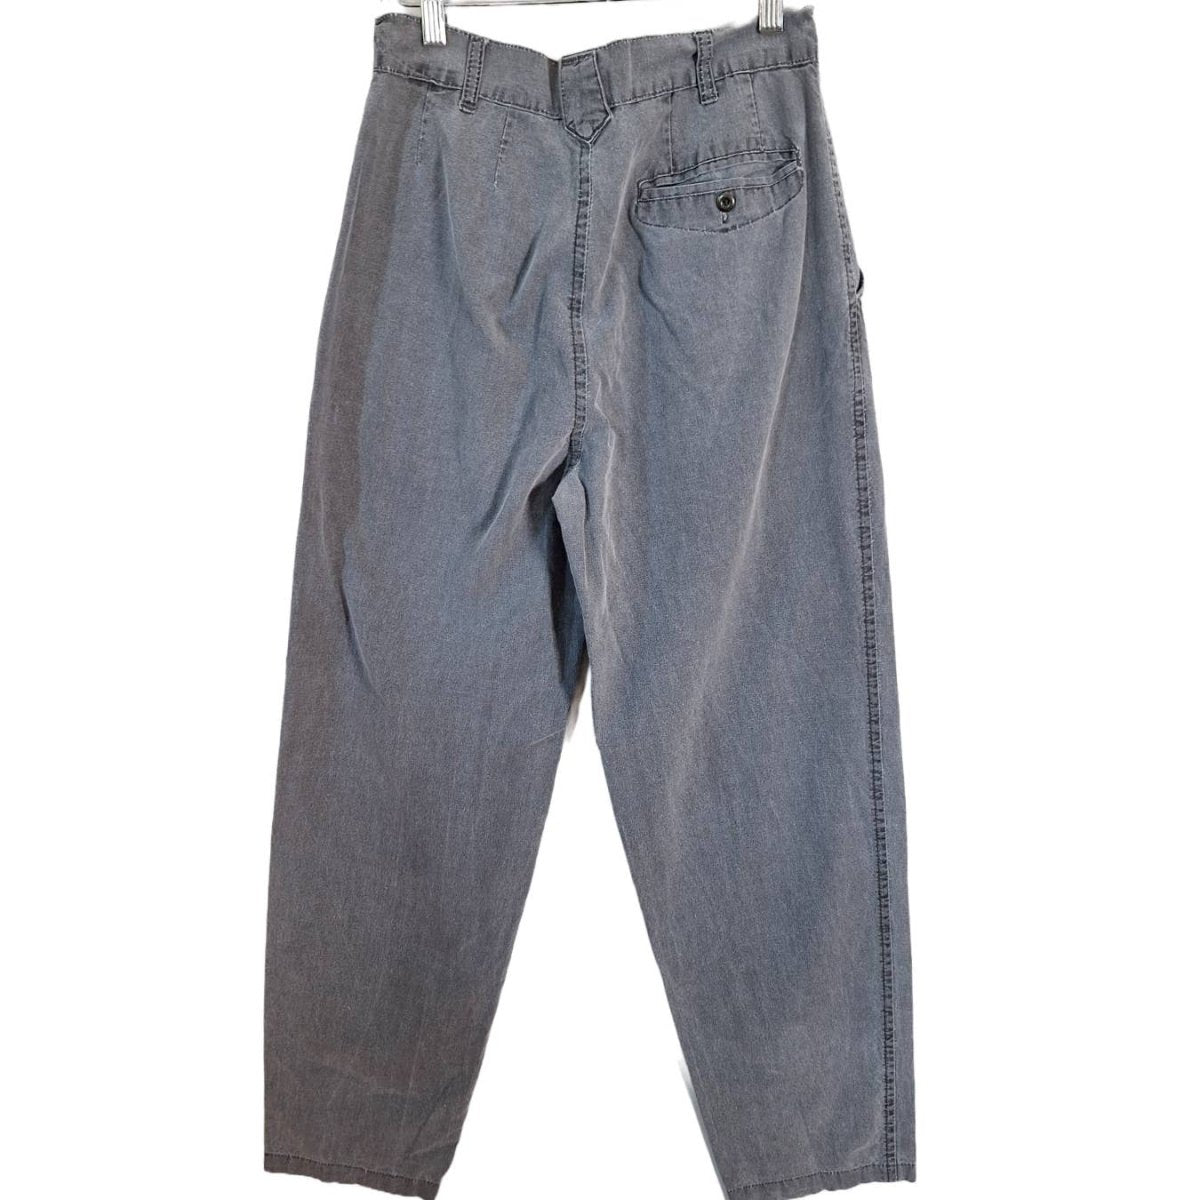 Vintage 80s/90s Gray Cotton Union Bay Pants Size Waist 30 - themallvintage The Mall Vintage